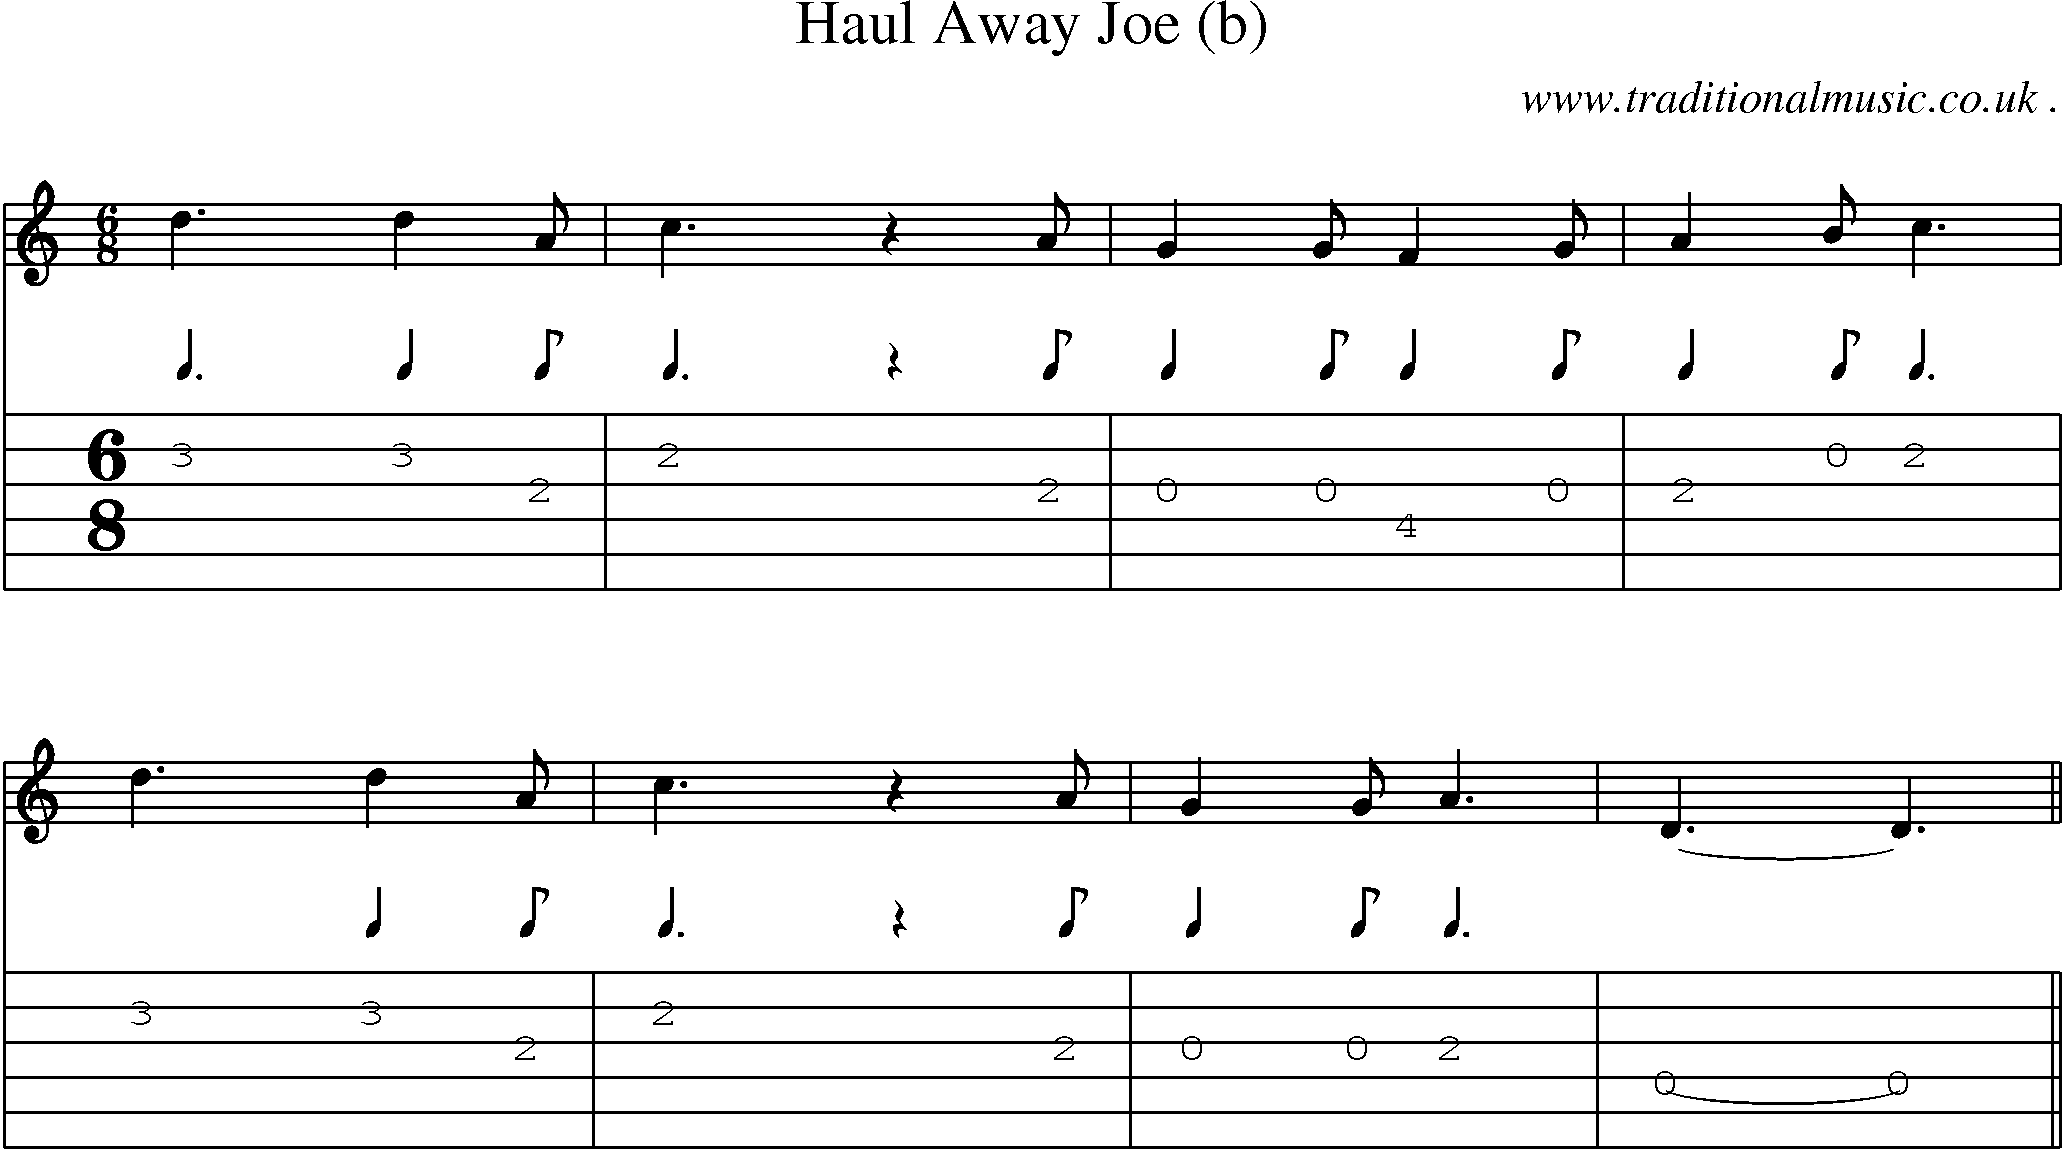 Sheet-Music and Guitar Tabs for Haul Away Joe (b)